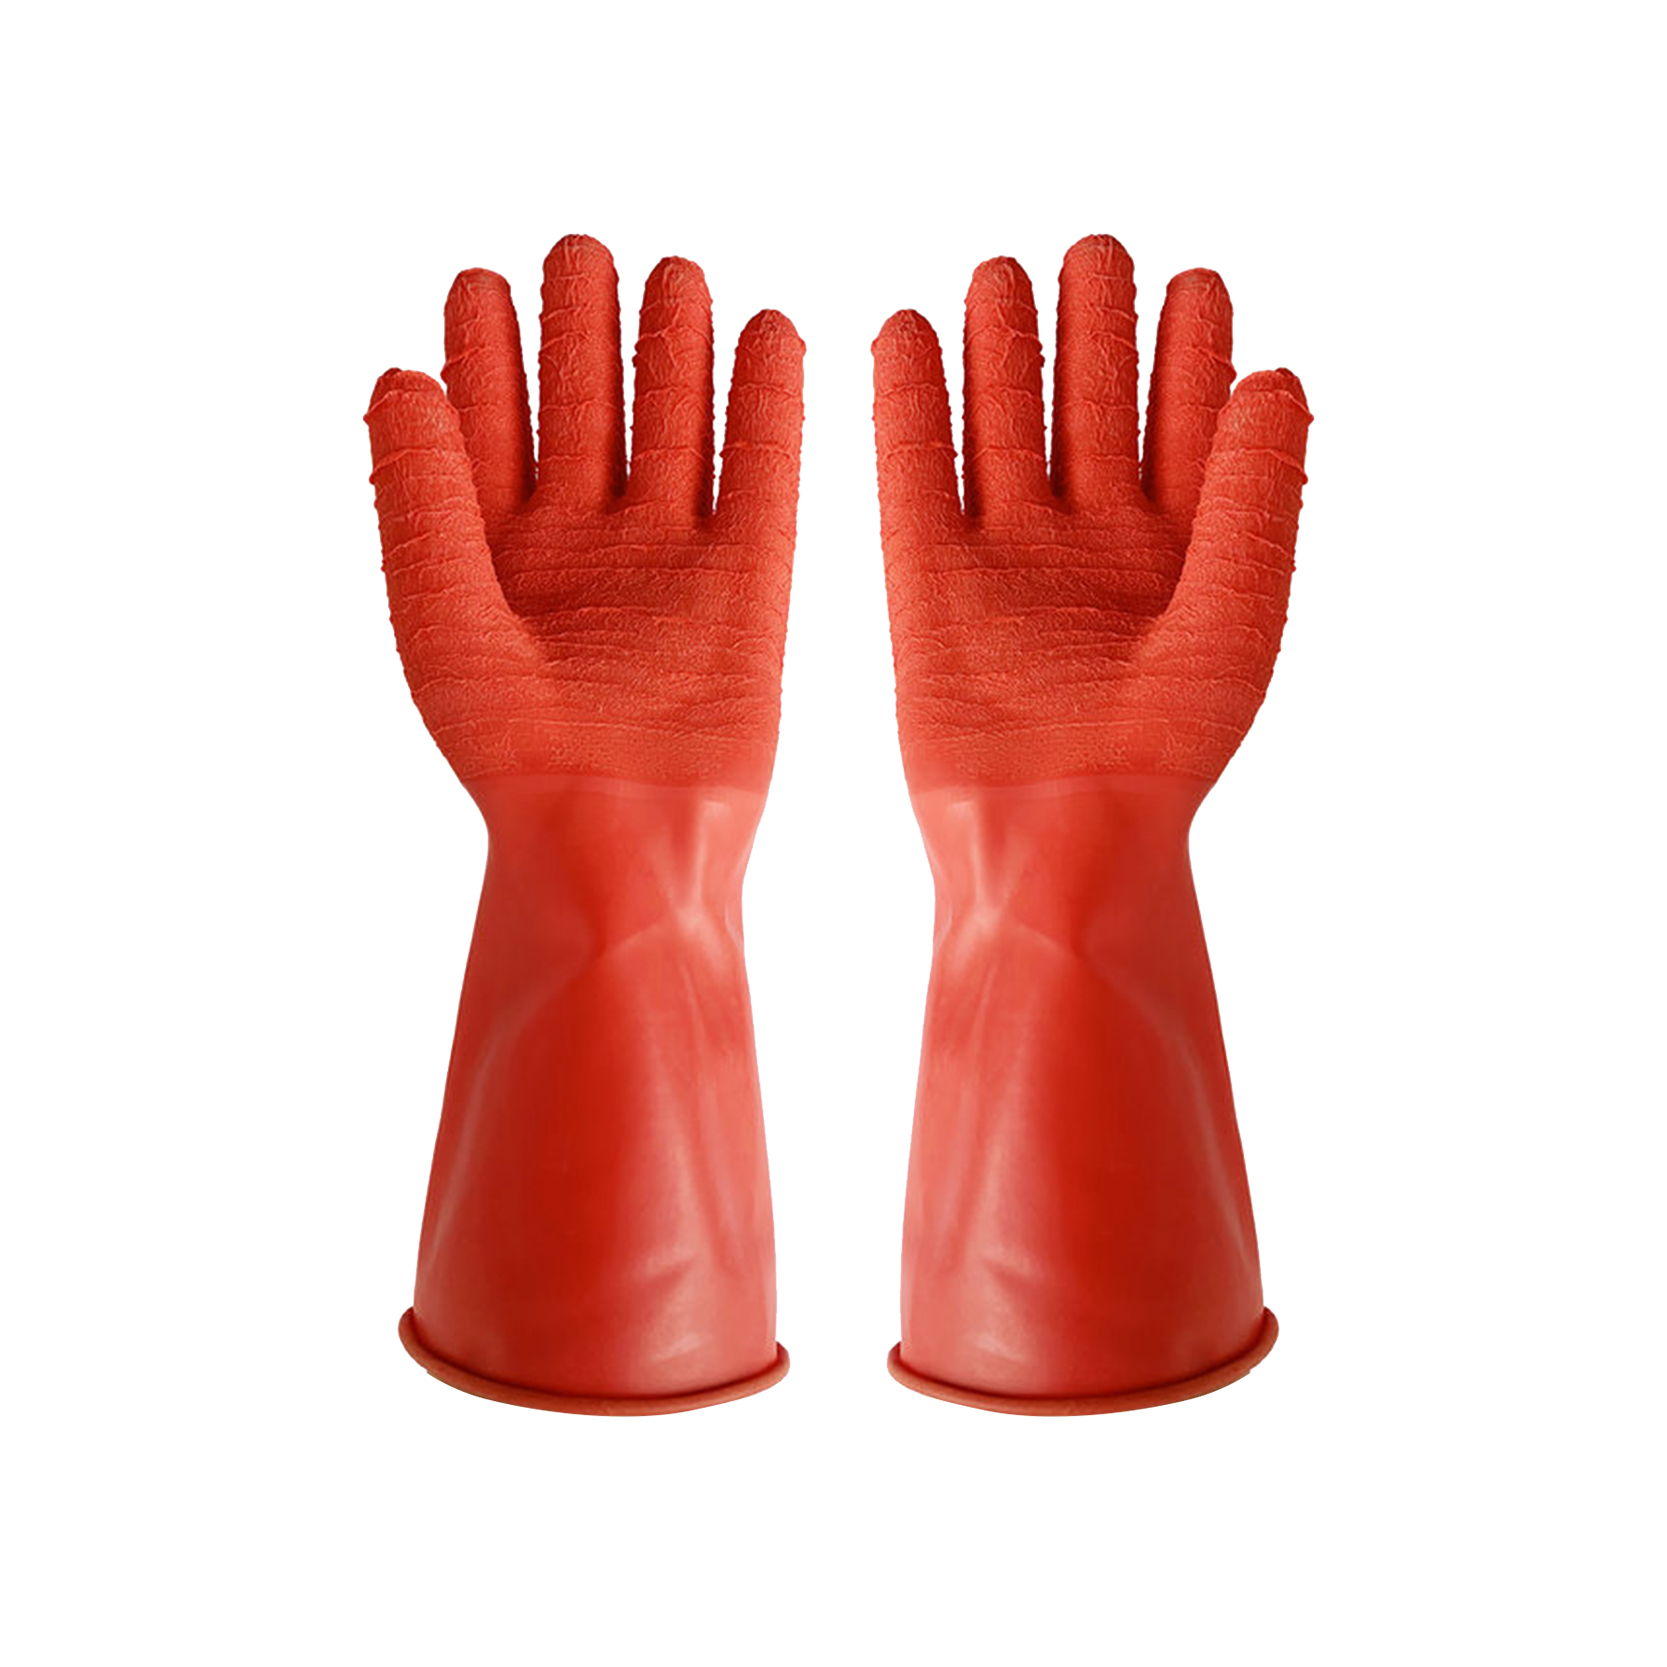 Protišmykové mechanické chemické ochranné rukavice z červeného prírodného latexu s vráskavou dlaňou